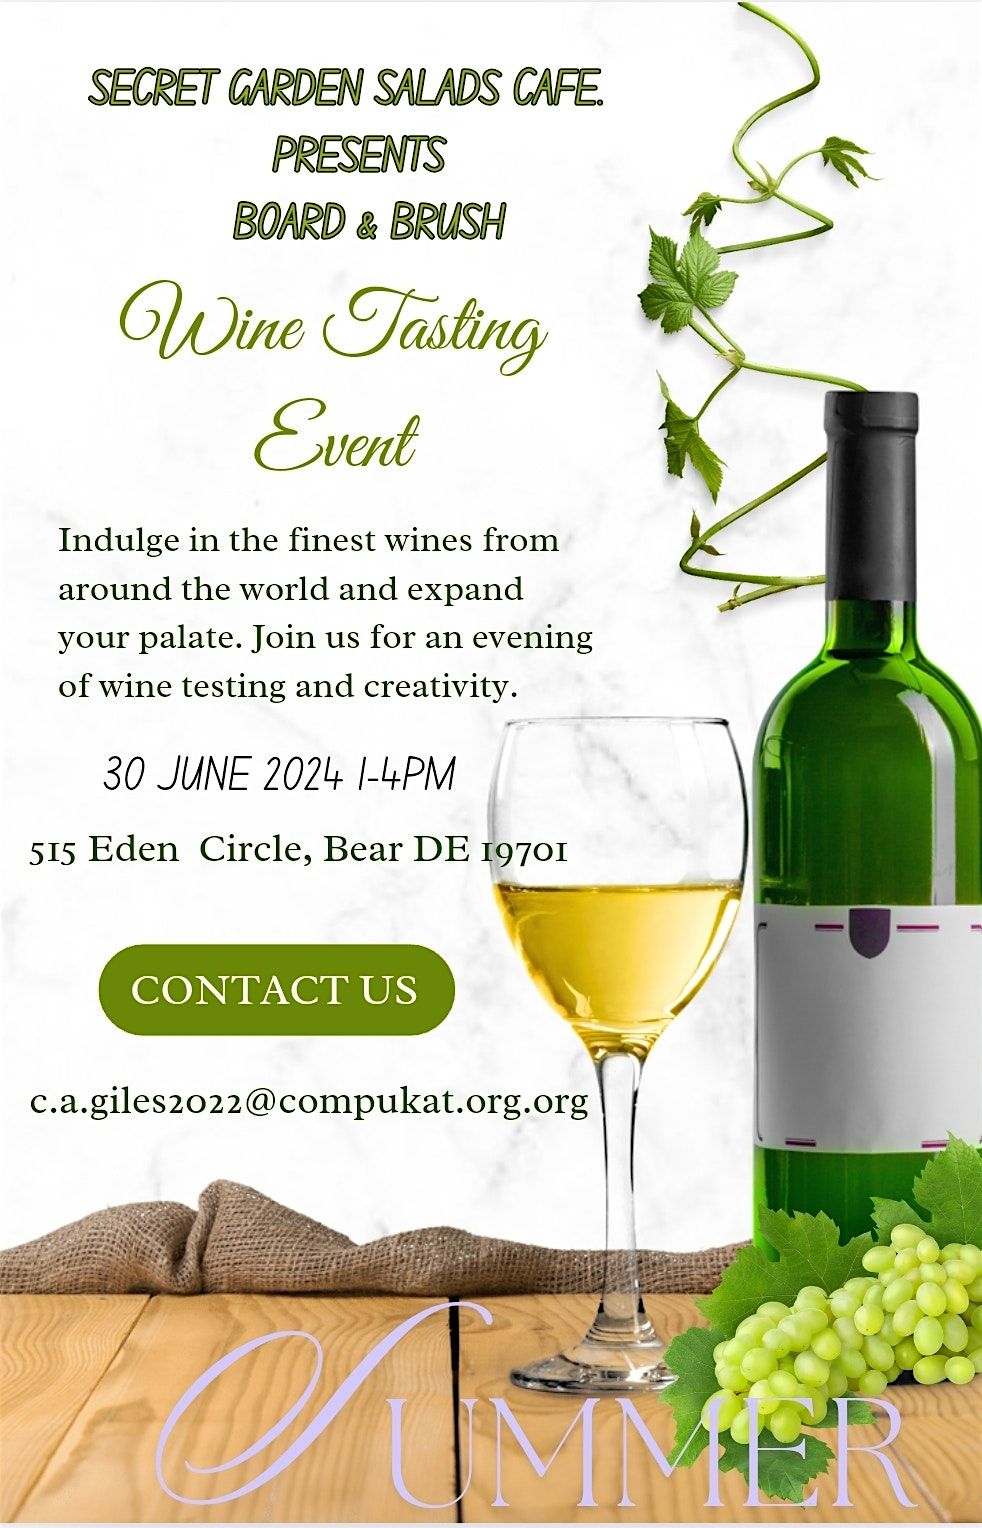 Board & Brush Wine Tasting Event